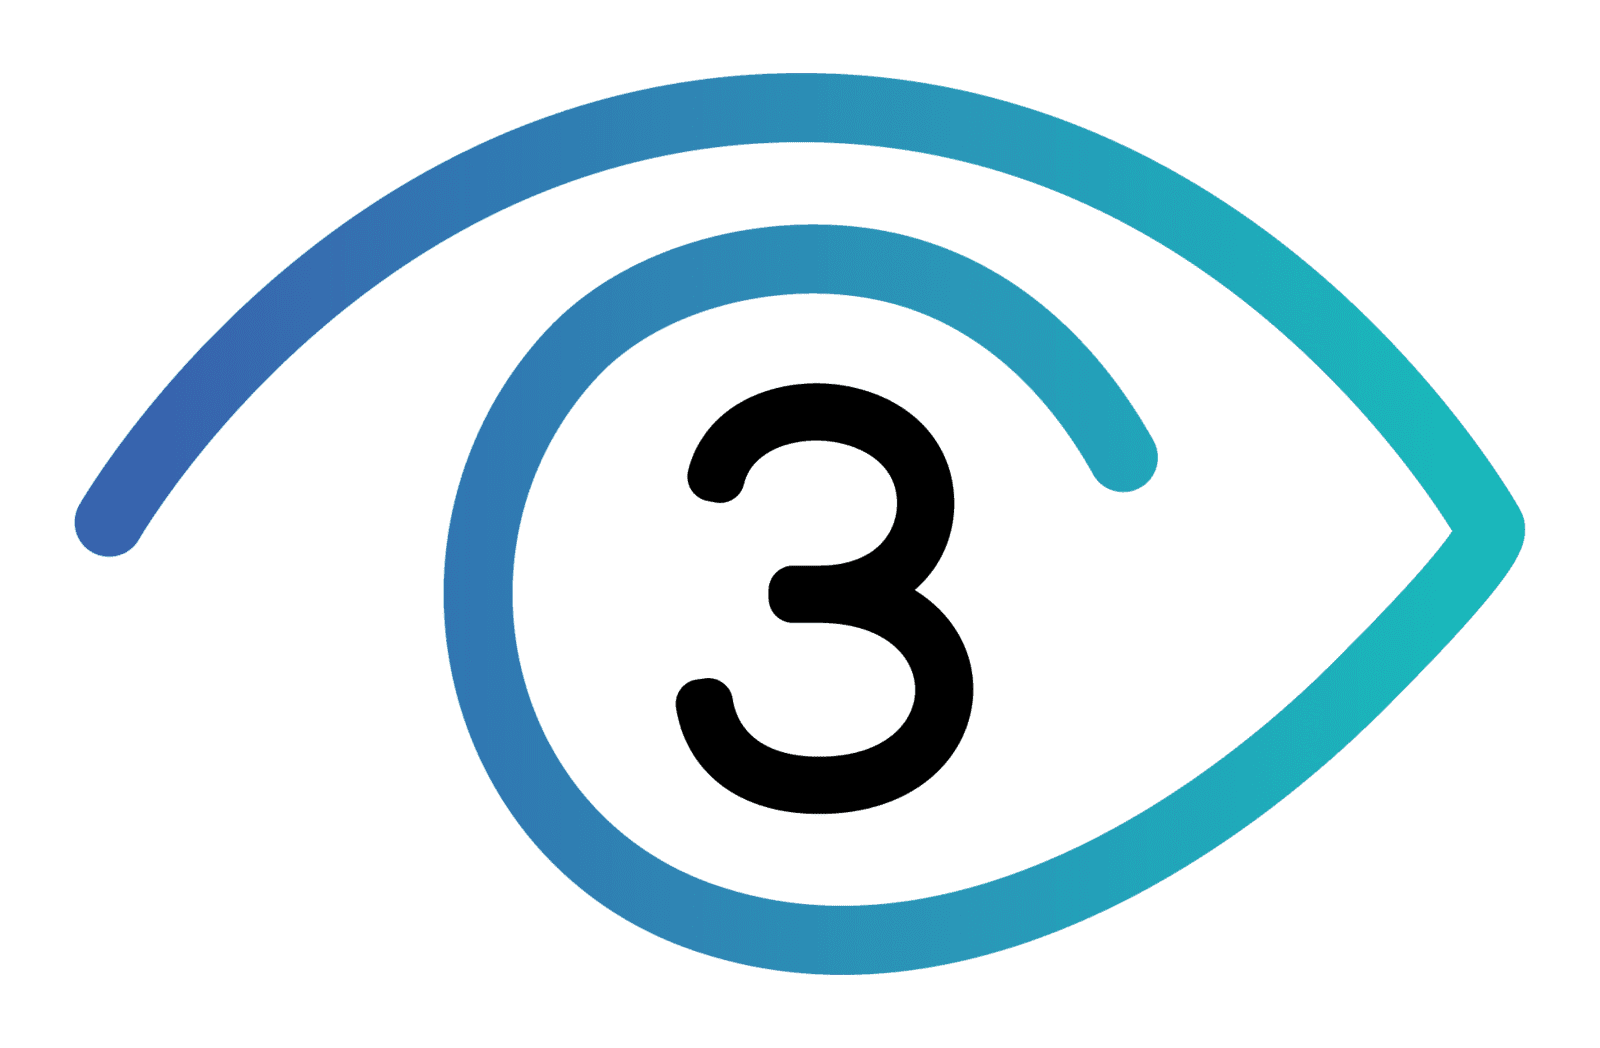 c3 solutions logo